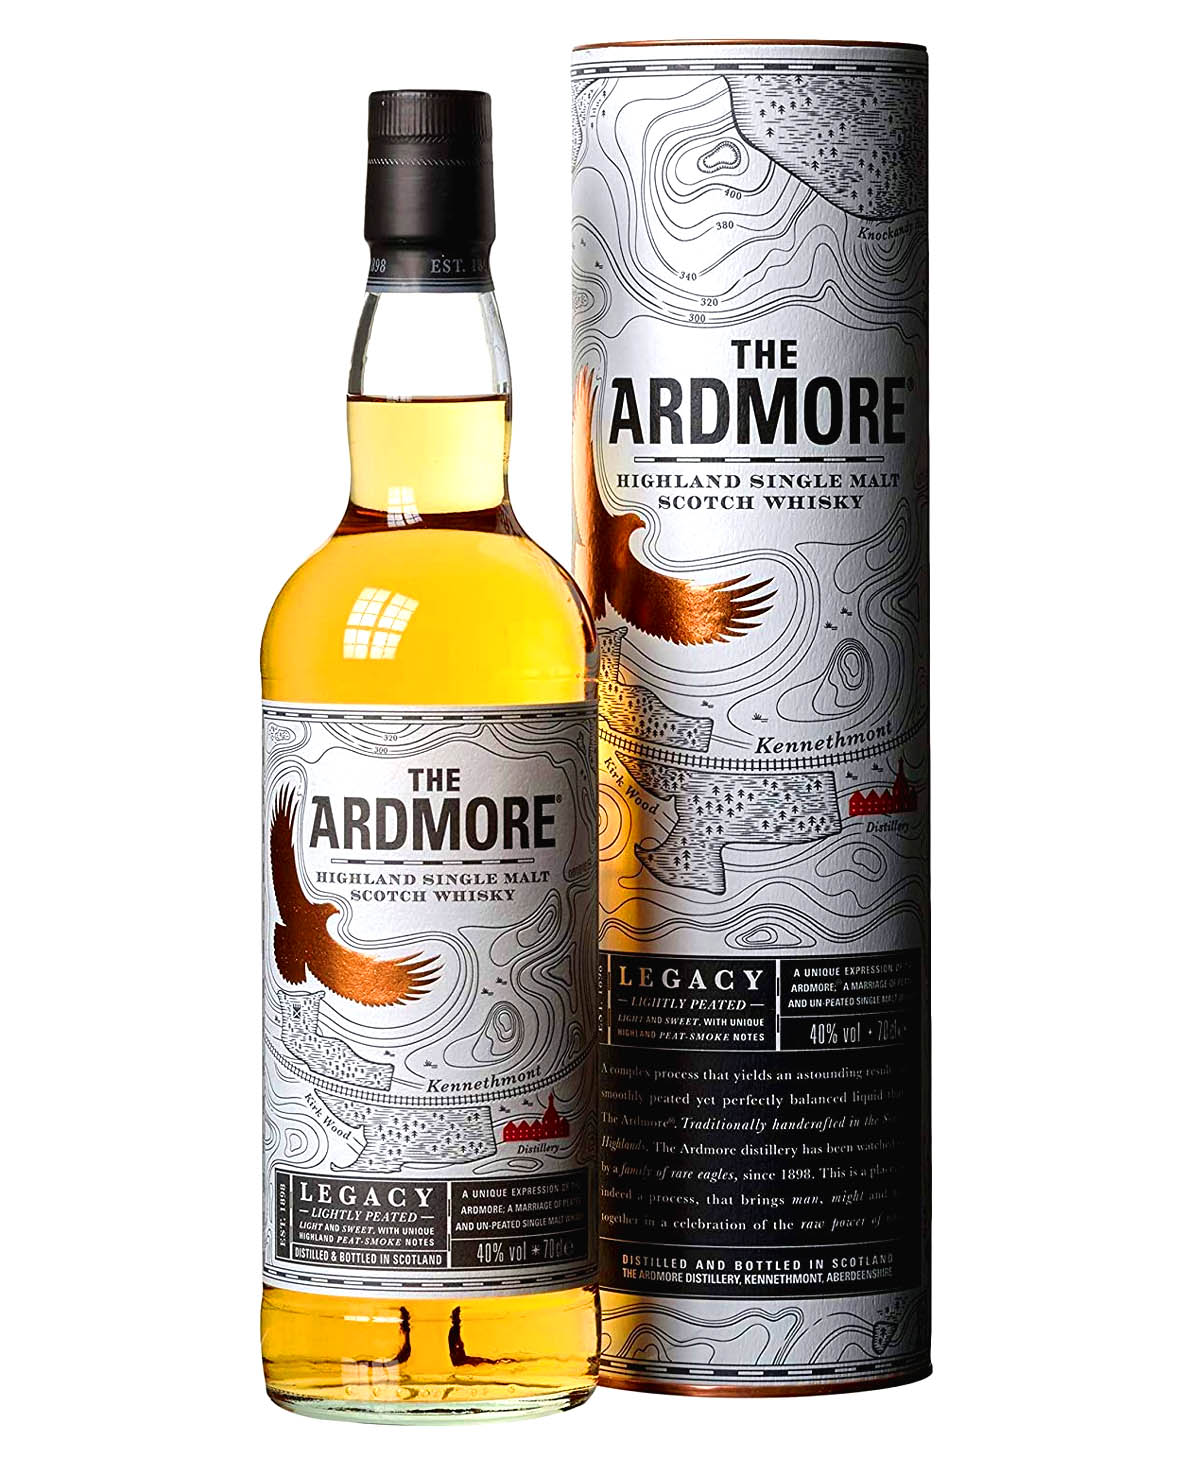 Highland single malt scotch whisky. Ardmore виски. The Ardmore Highland Single Malt. Русский виски.